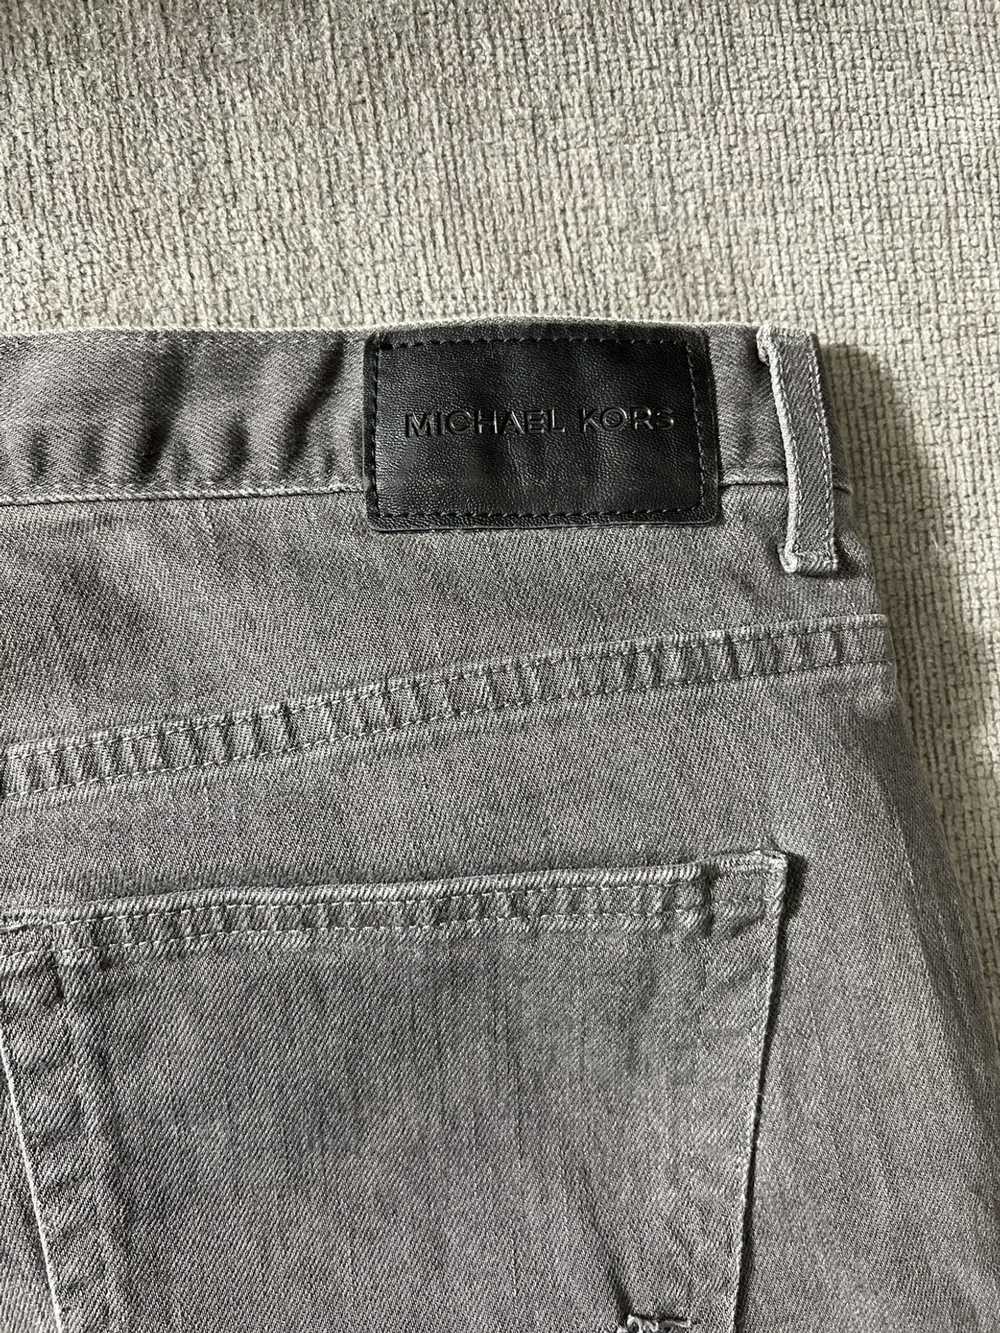 Michael Kors Micheal Kors jeans - image 3